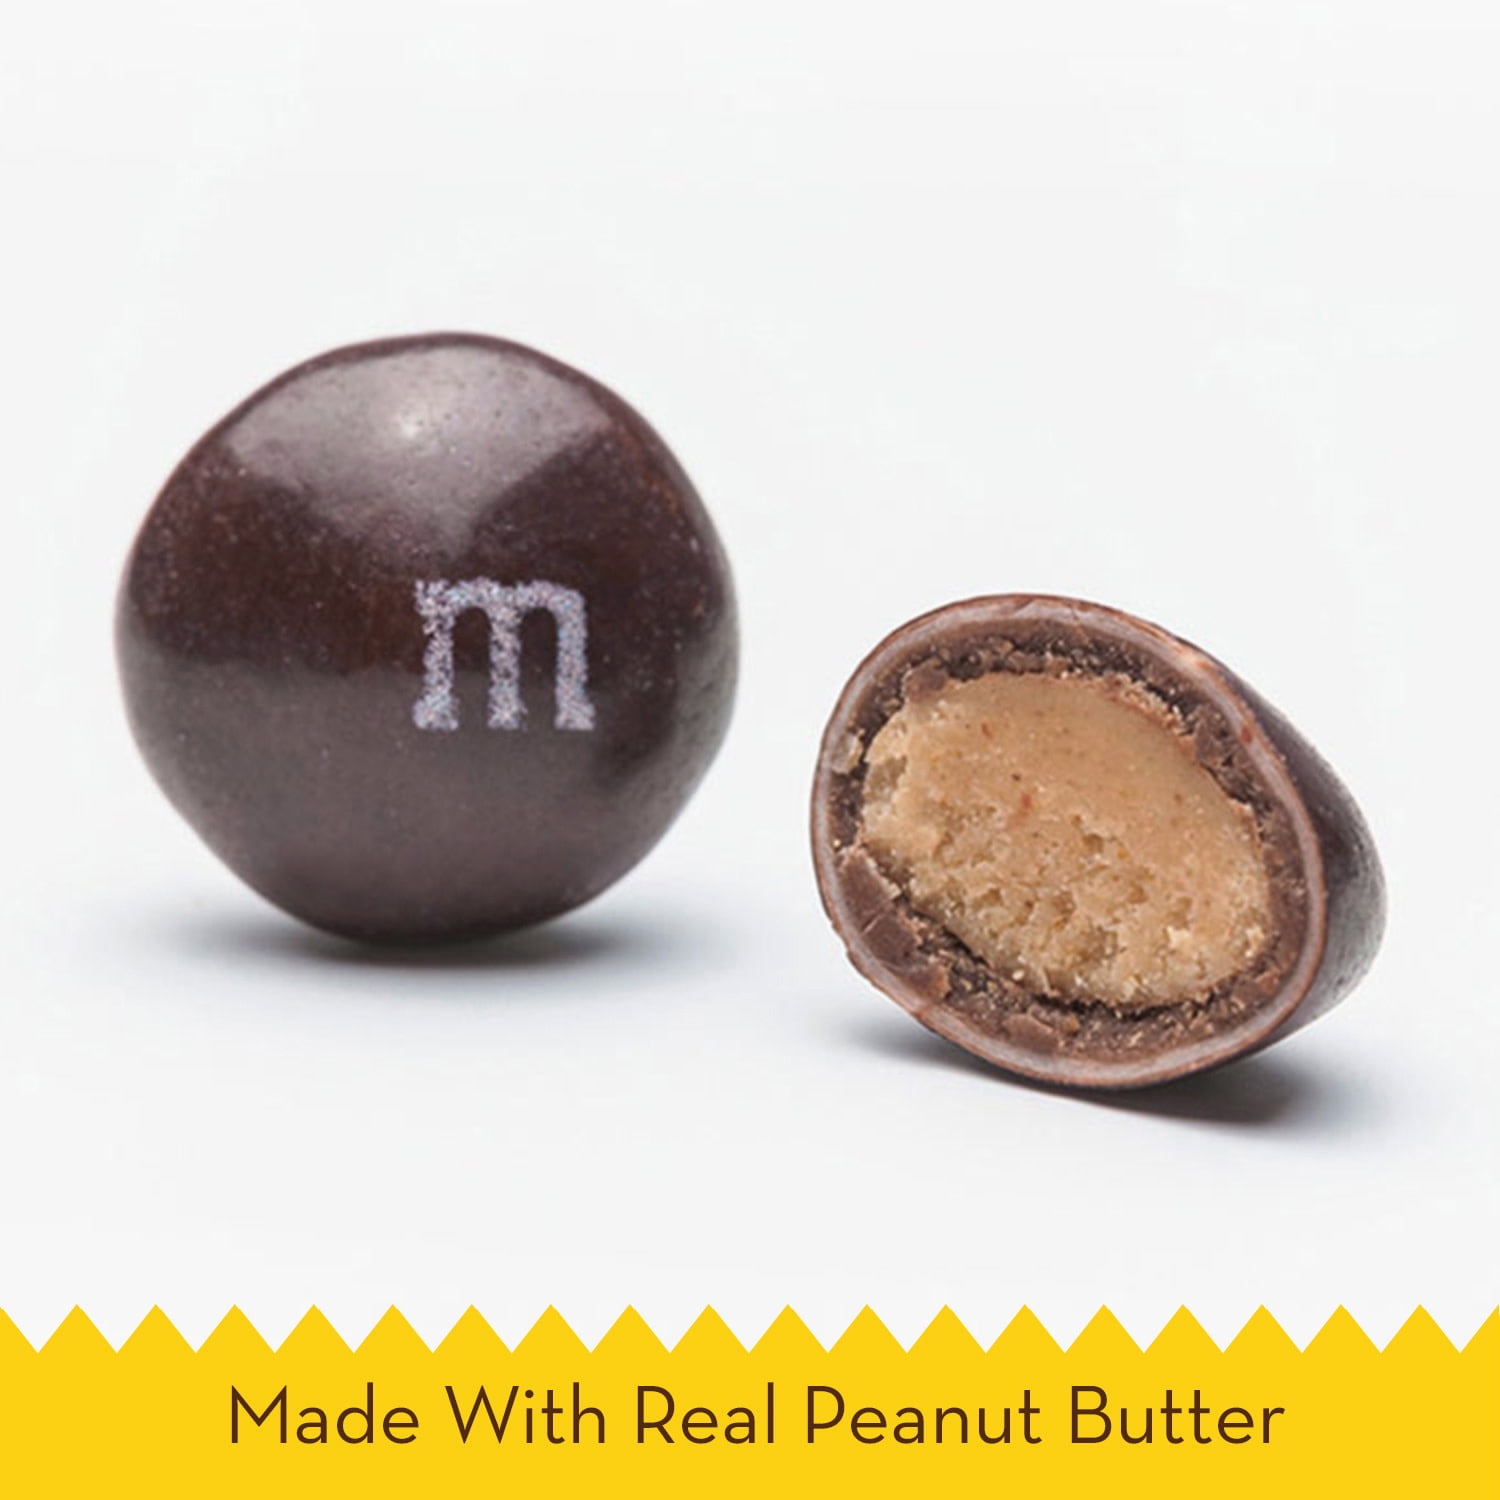 M&M'S Holiday Peanut Chocolate Candy Bag, 11.4 oz, Chocolate